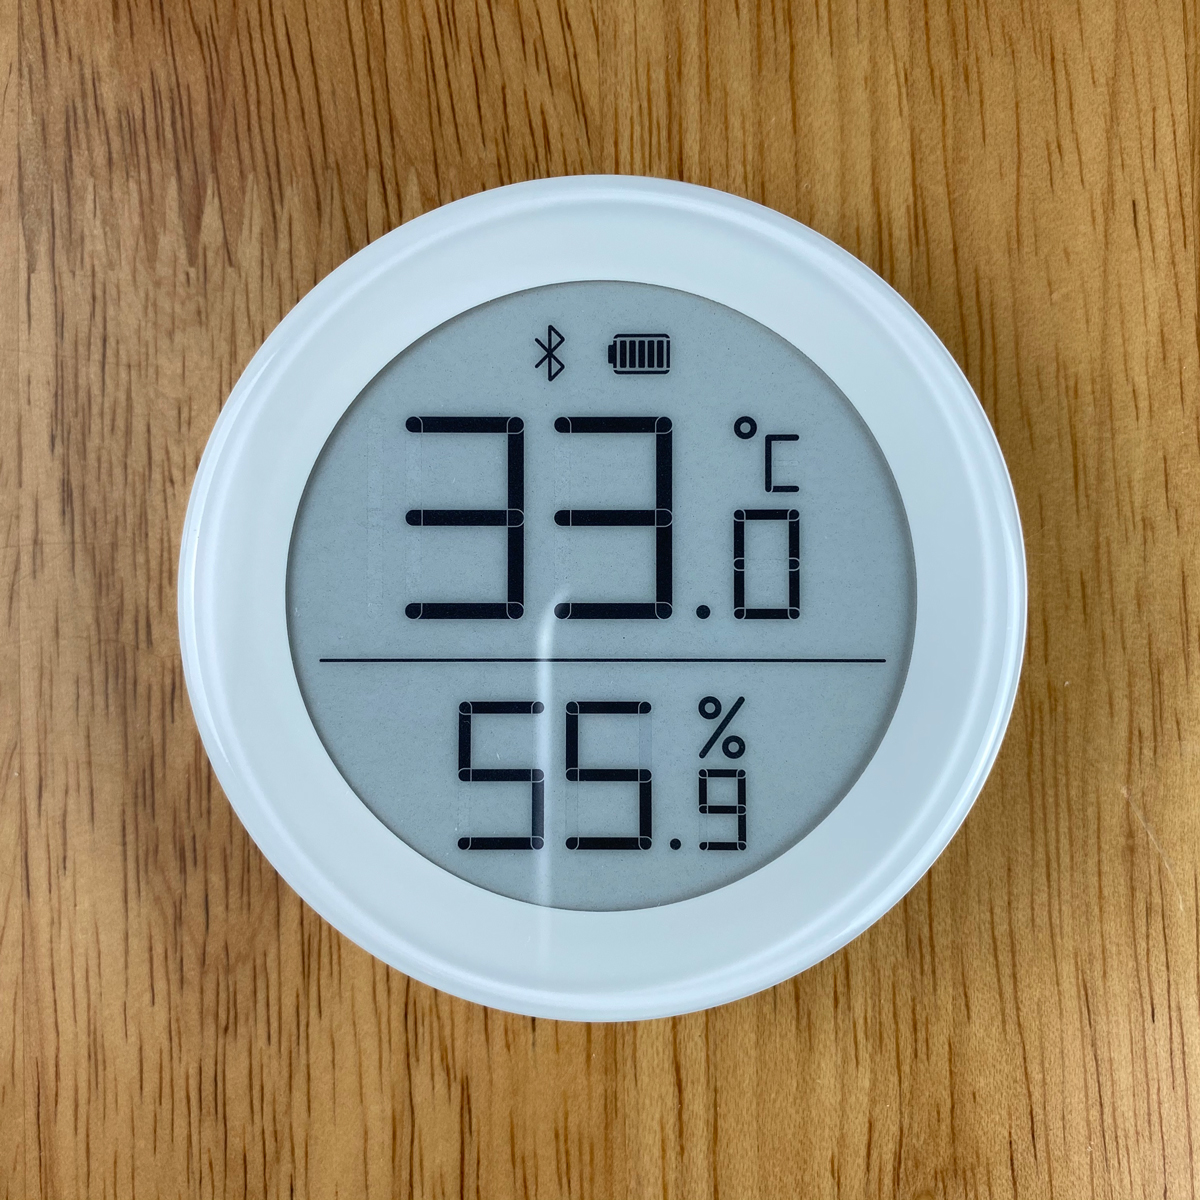 Qingping HomeKit-Thermometer setzt jetzt auf Thread ›